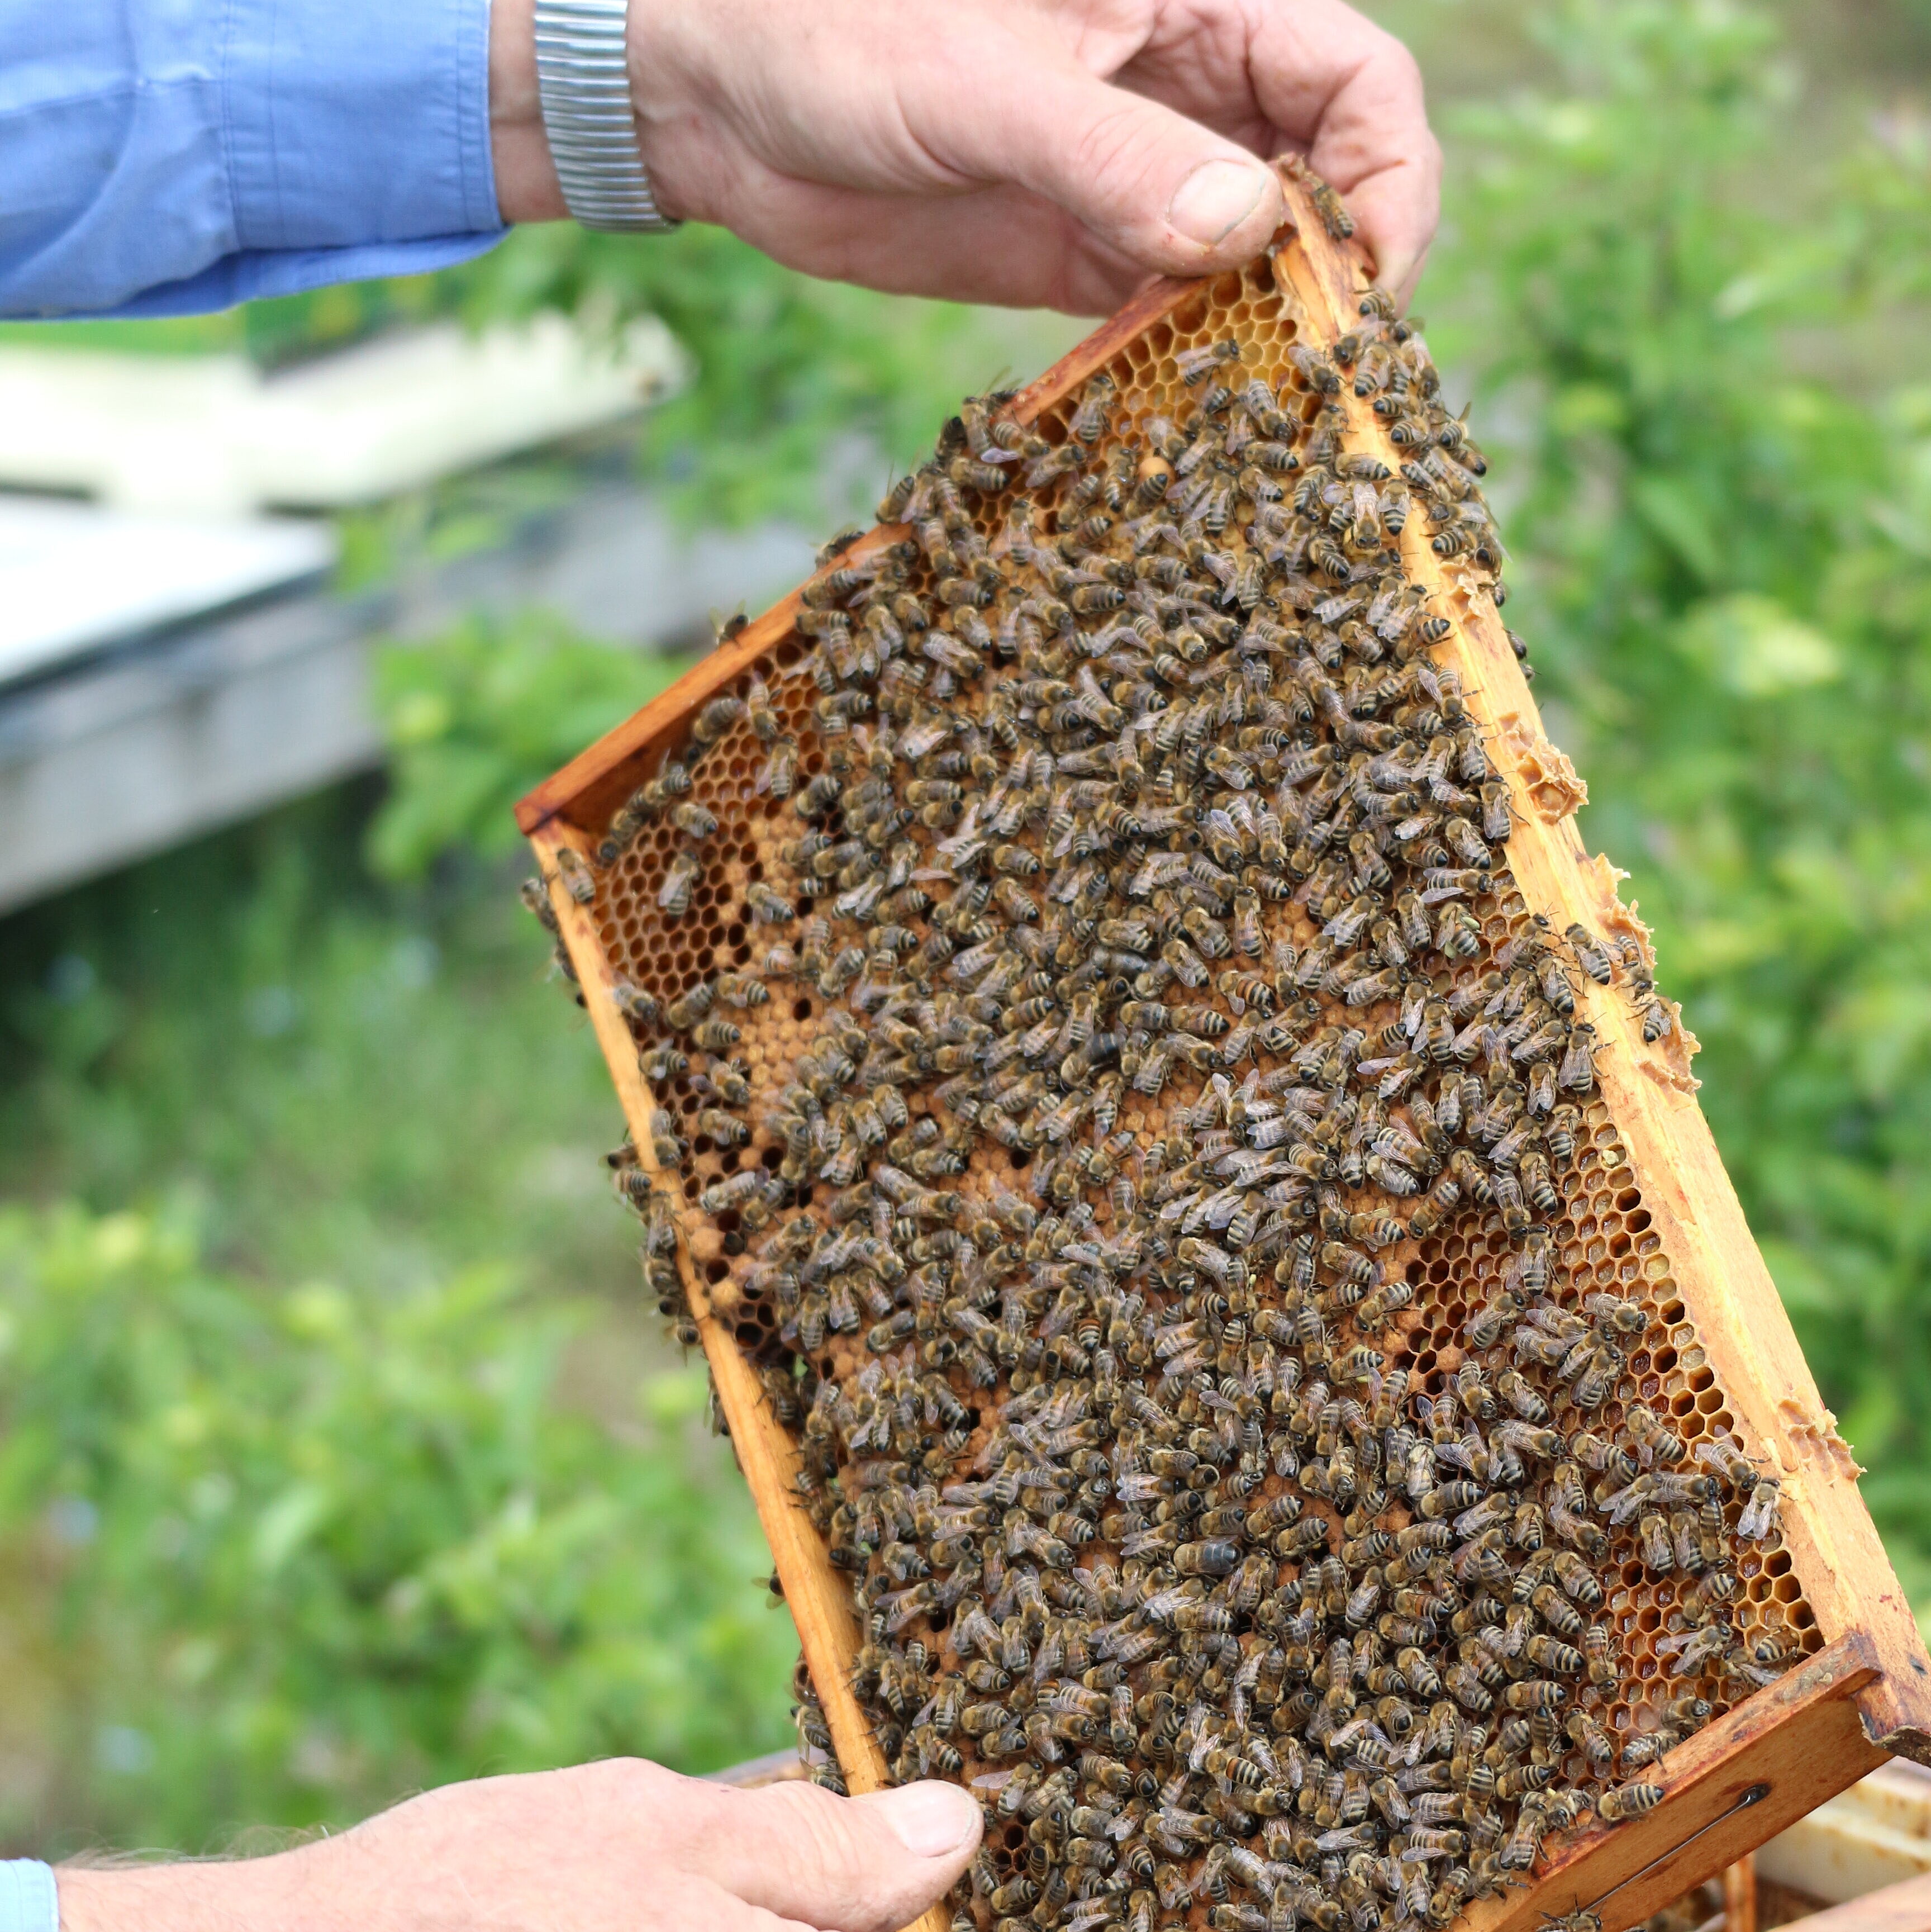 Hoheward-Imker zeigt Bienenwaben